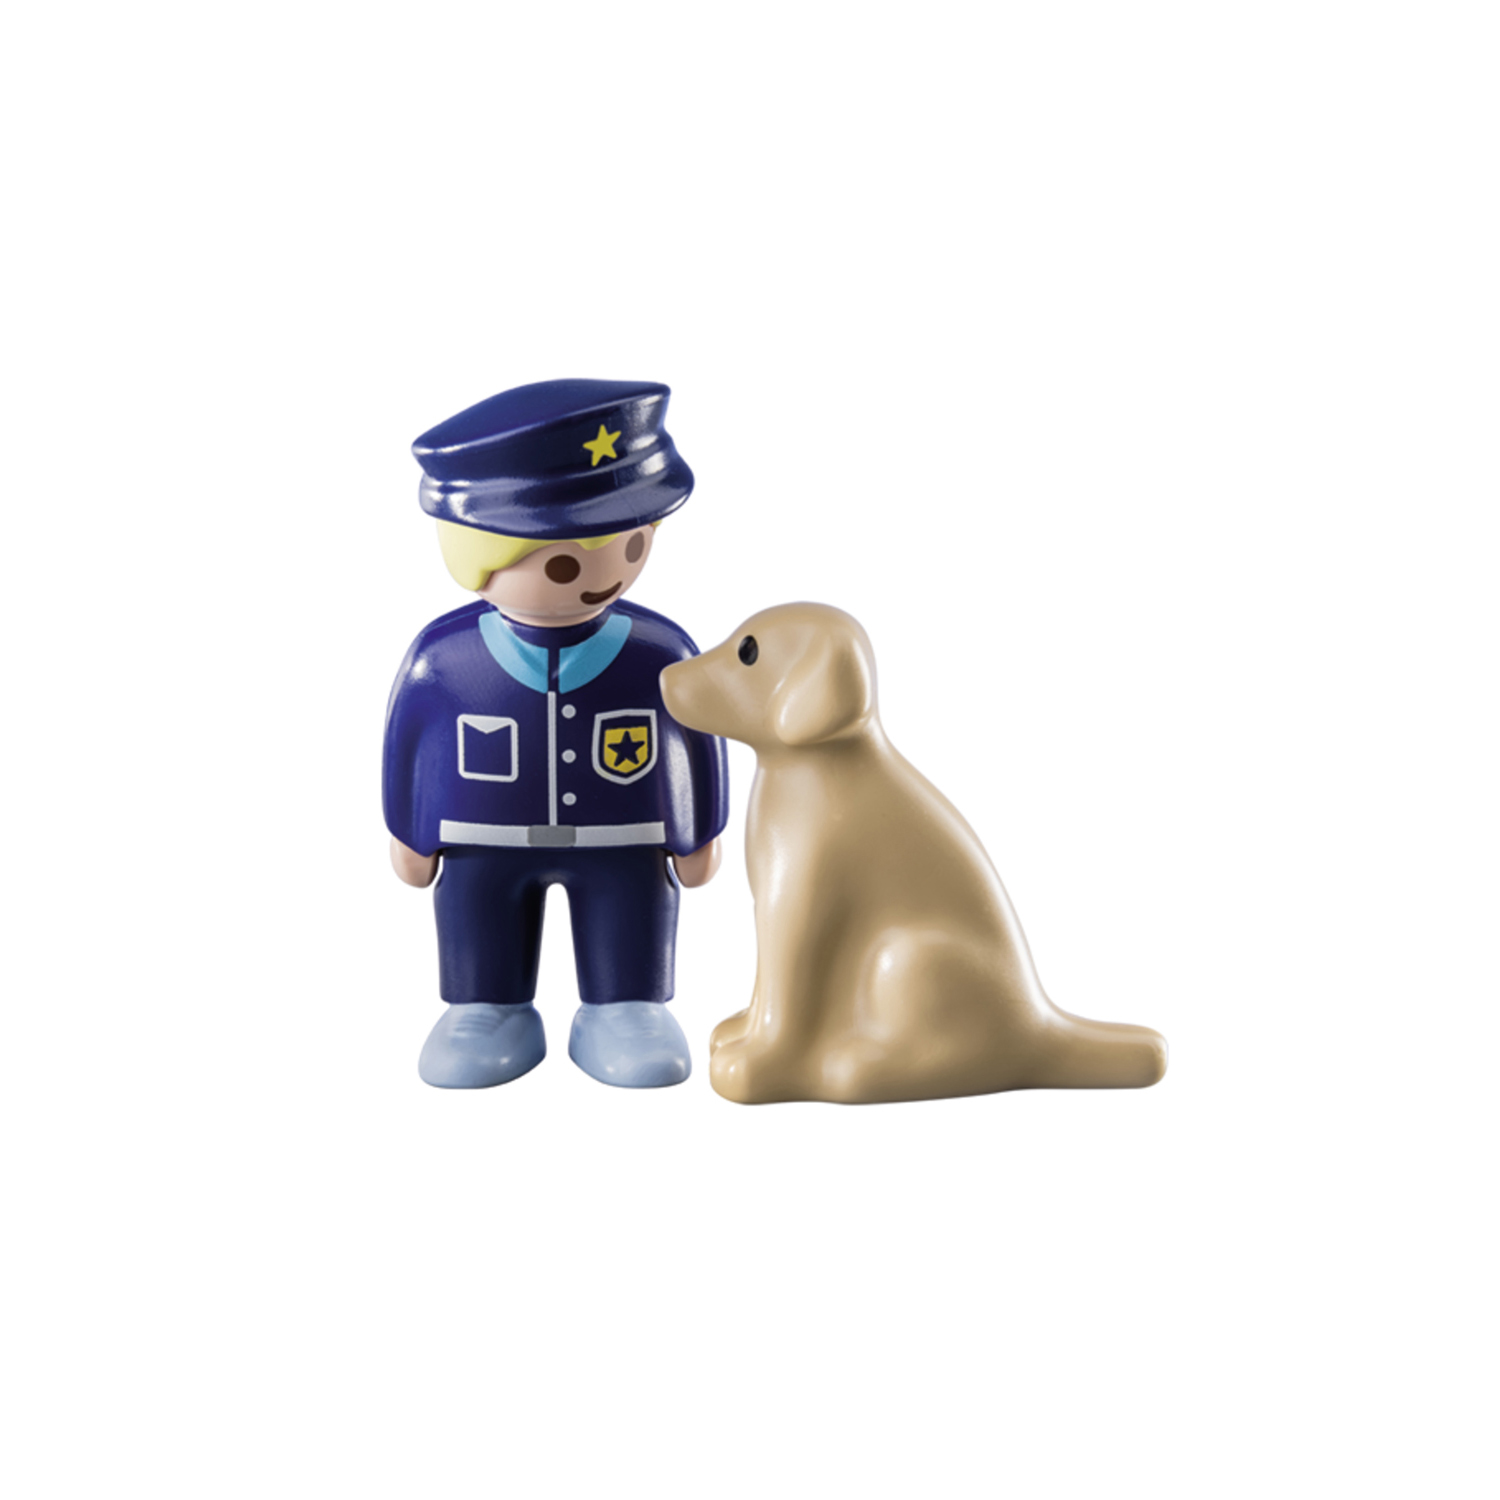 Playmobil Αστυνομικός Με Εκπαιδευμένο Σκύλο (70408)